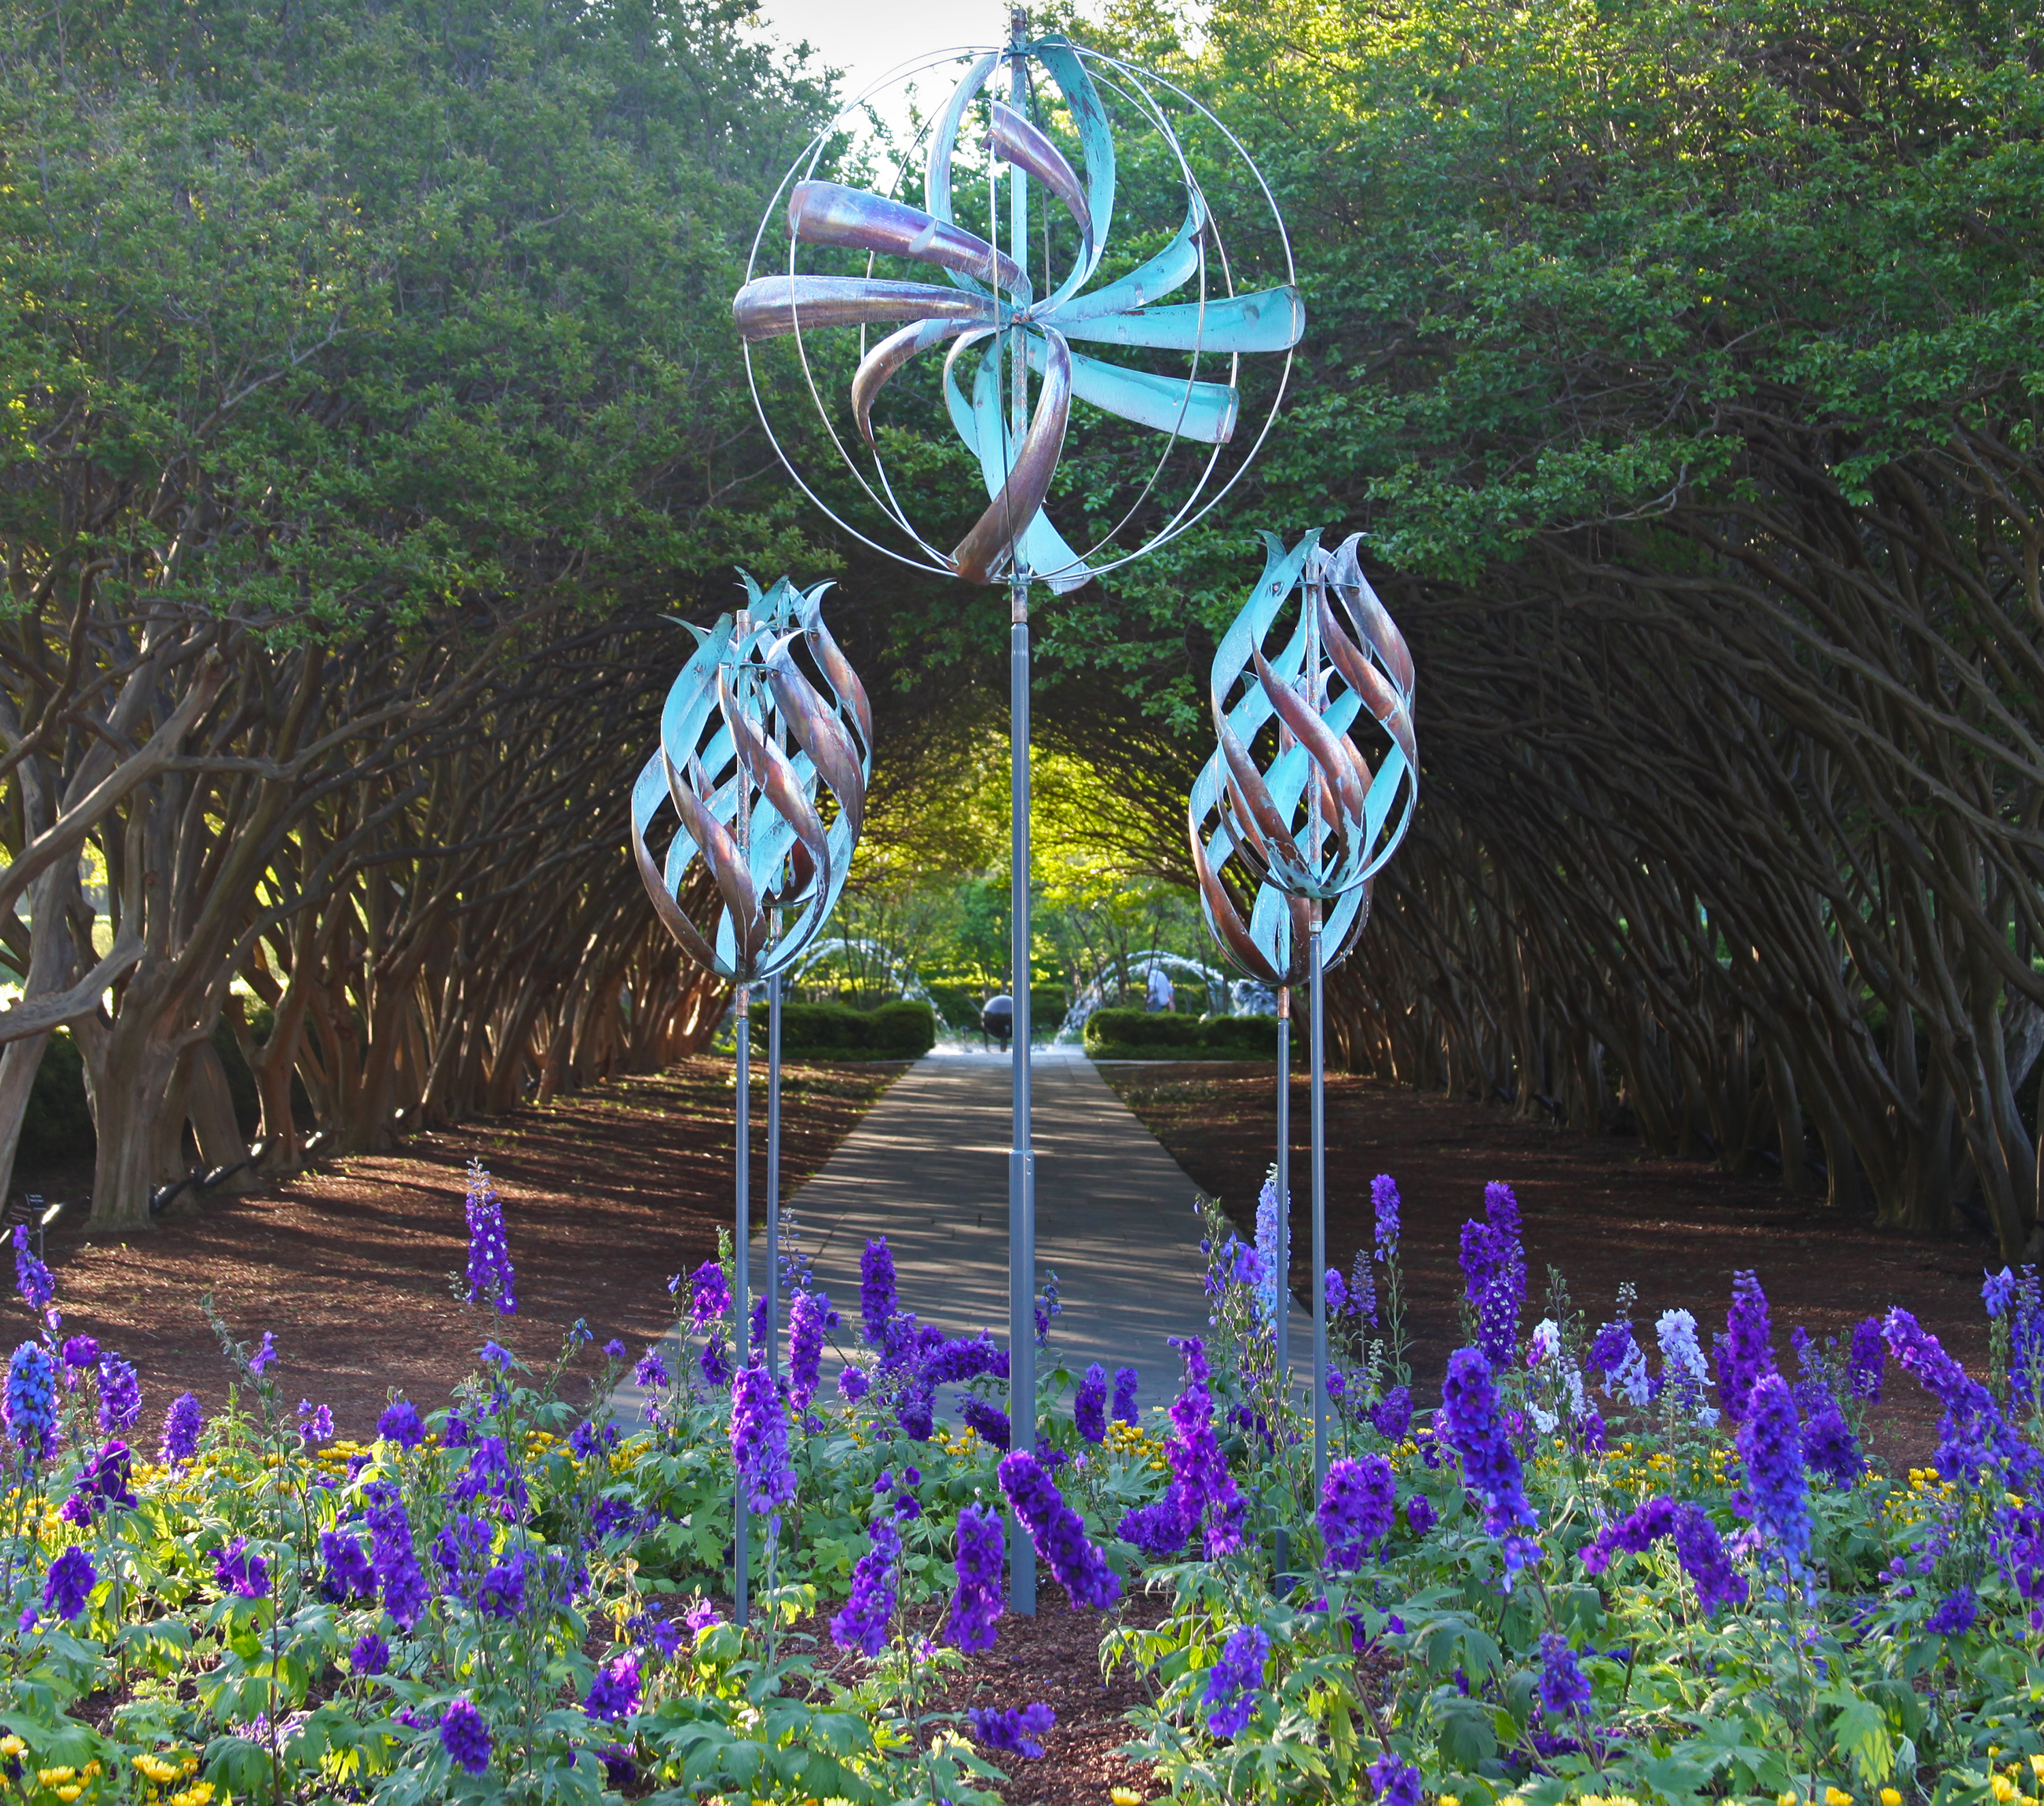 Kinetic Art Comes to the Dallas Arboretum, Courtesy of Lyman Whitaker -  Dallas Arboretum and Botanical Garden Blog